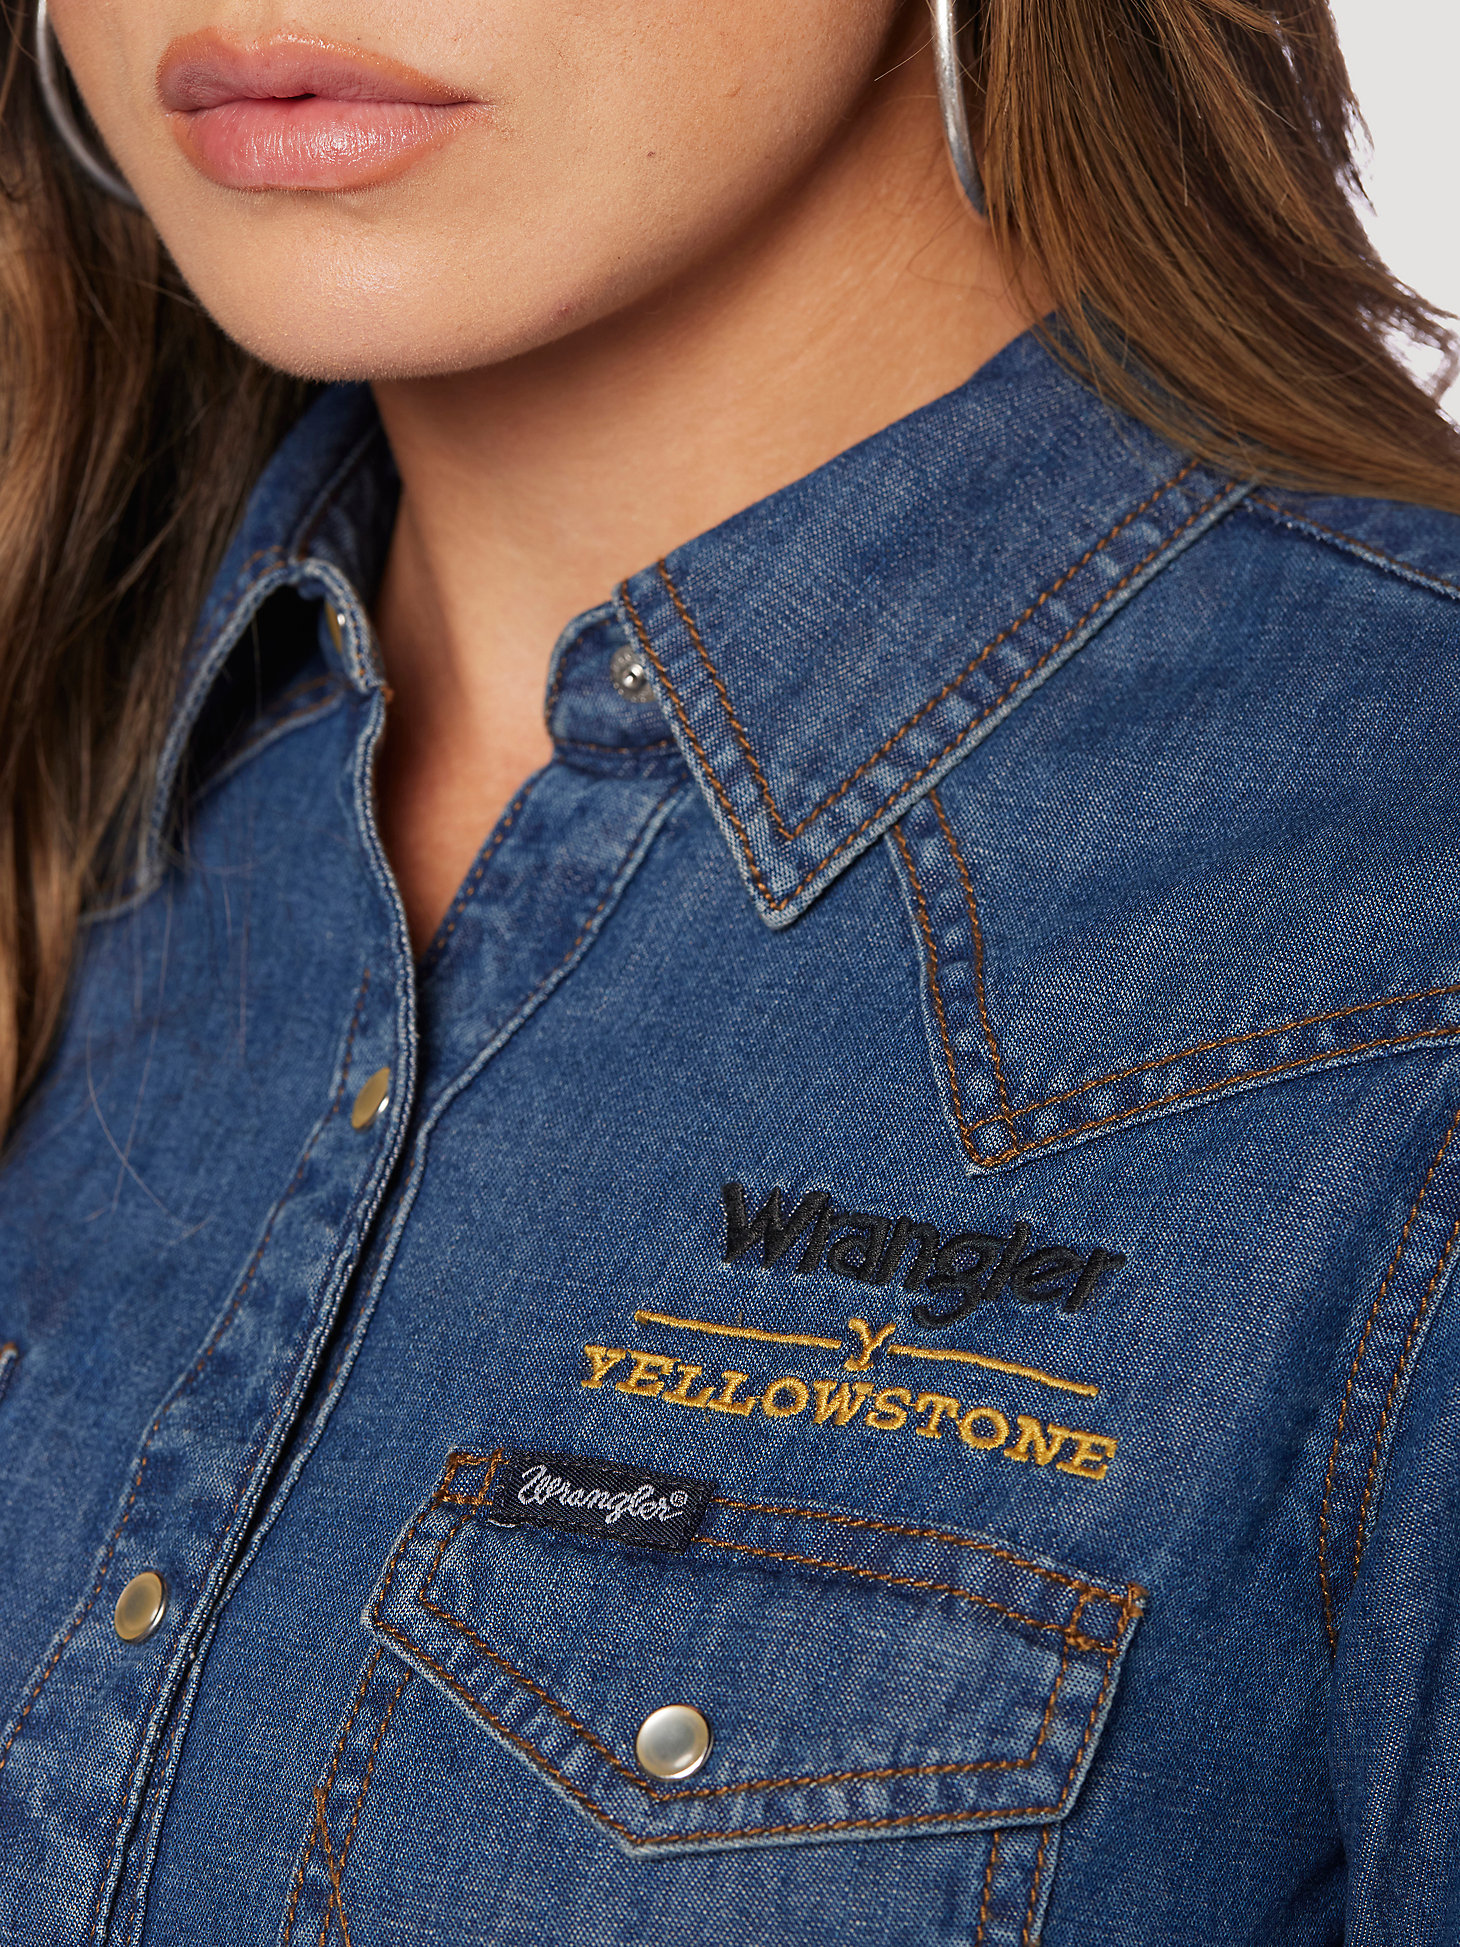 Wrangler x Yellowstone Women's Metallic Screen Print Denim Shirt in Dark Wash alternative view 2